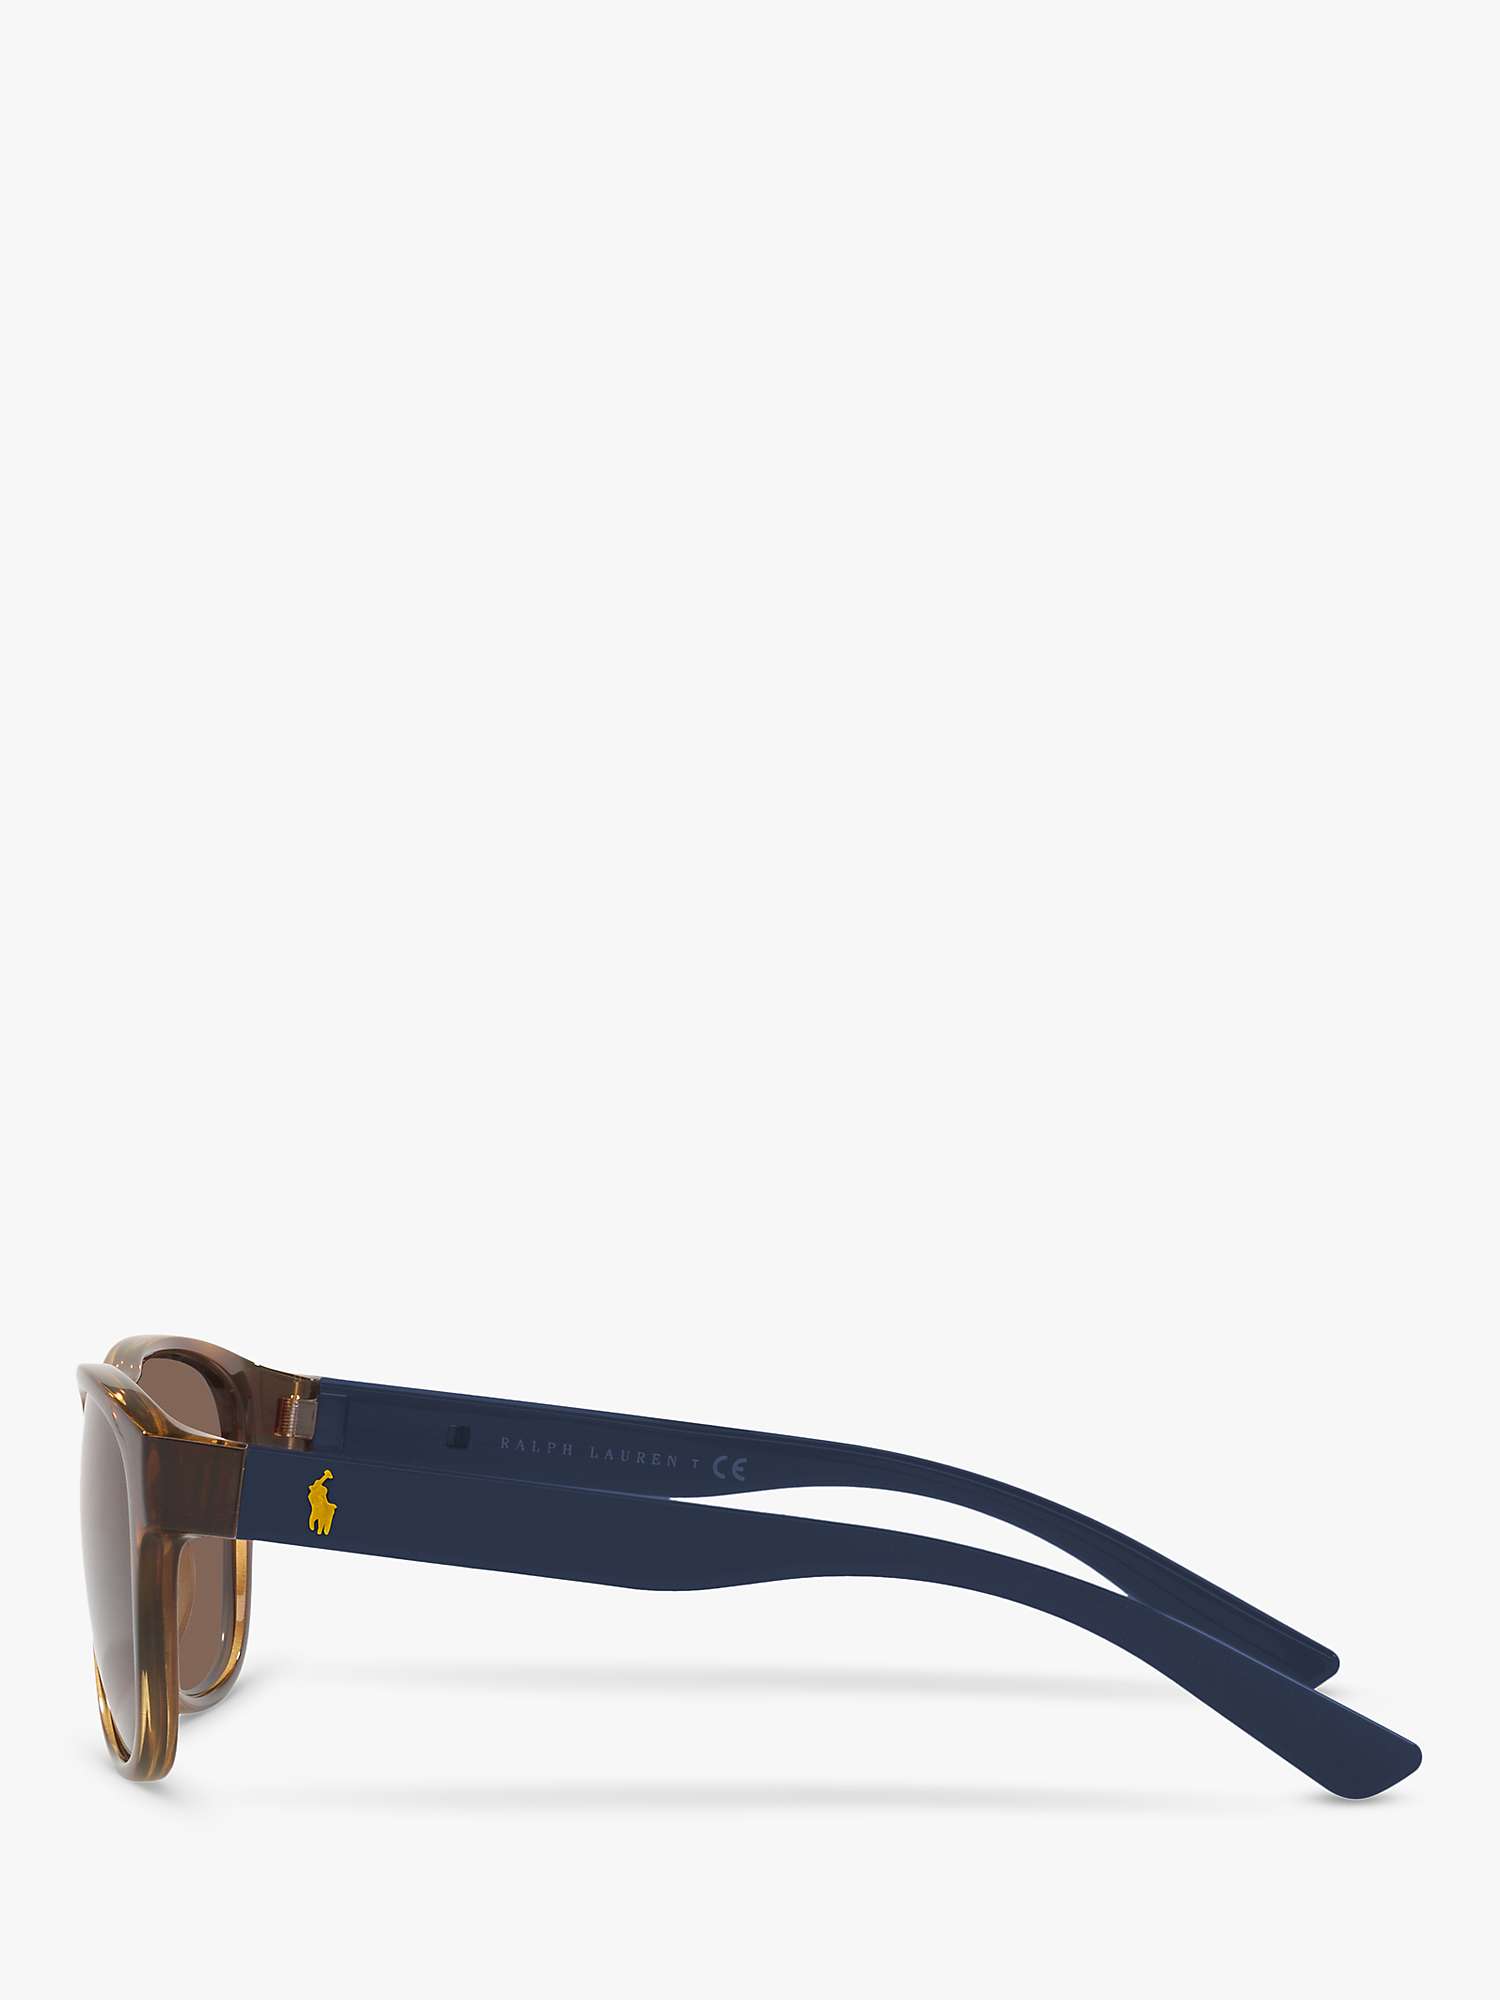 Buy Polo Ralph Lauren PH4180U Unisex Pillow Sunglasses, Havana/Brown Online at johnlewis.com